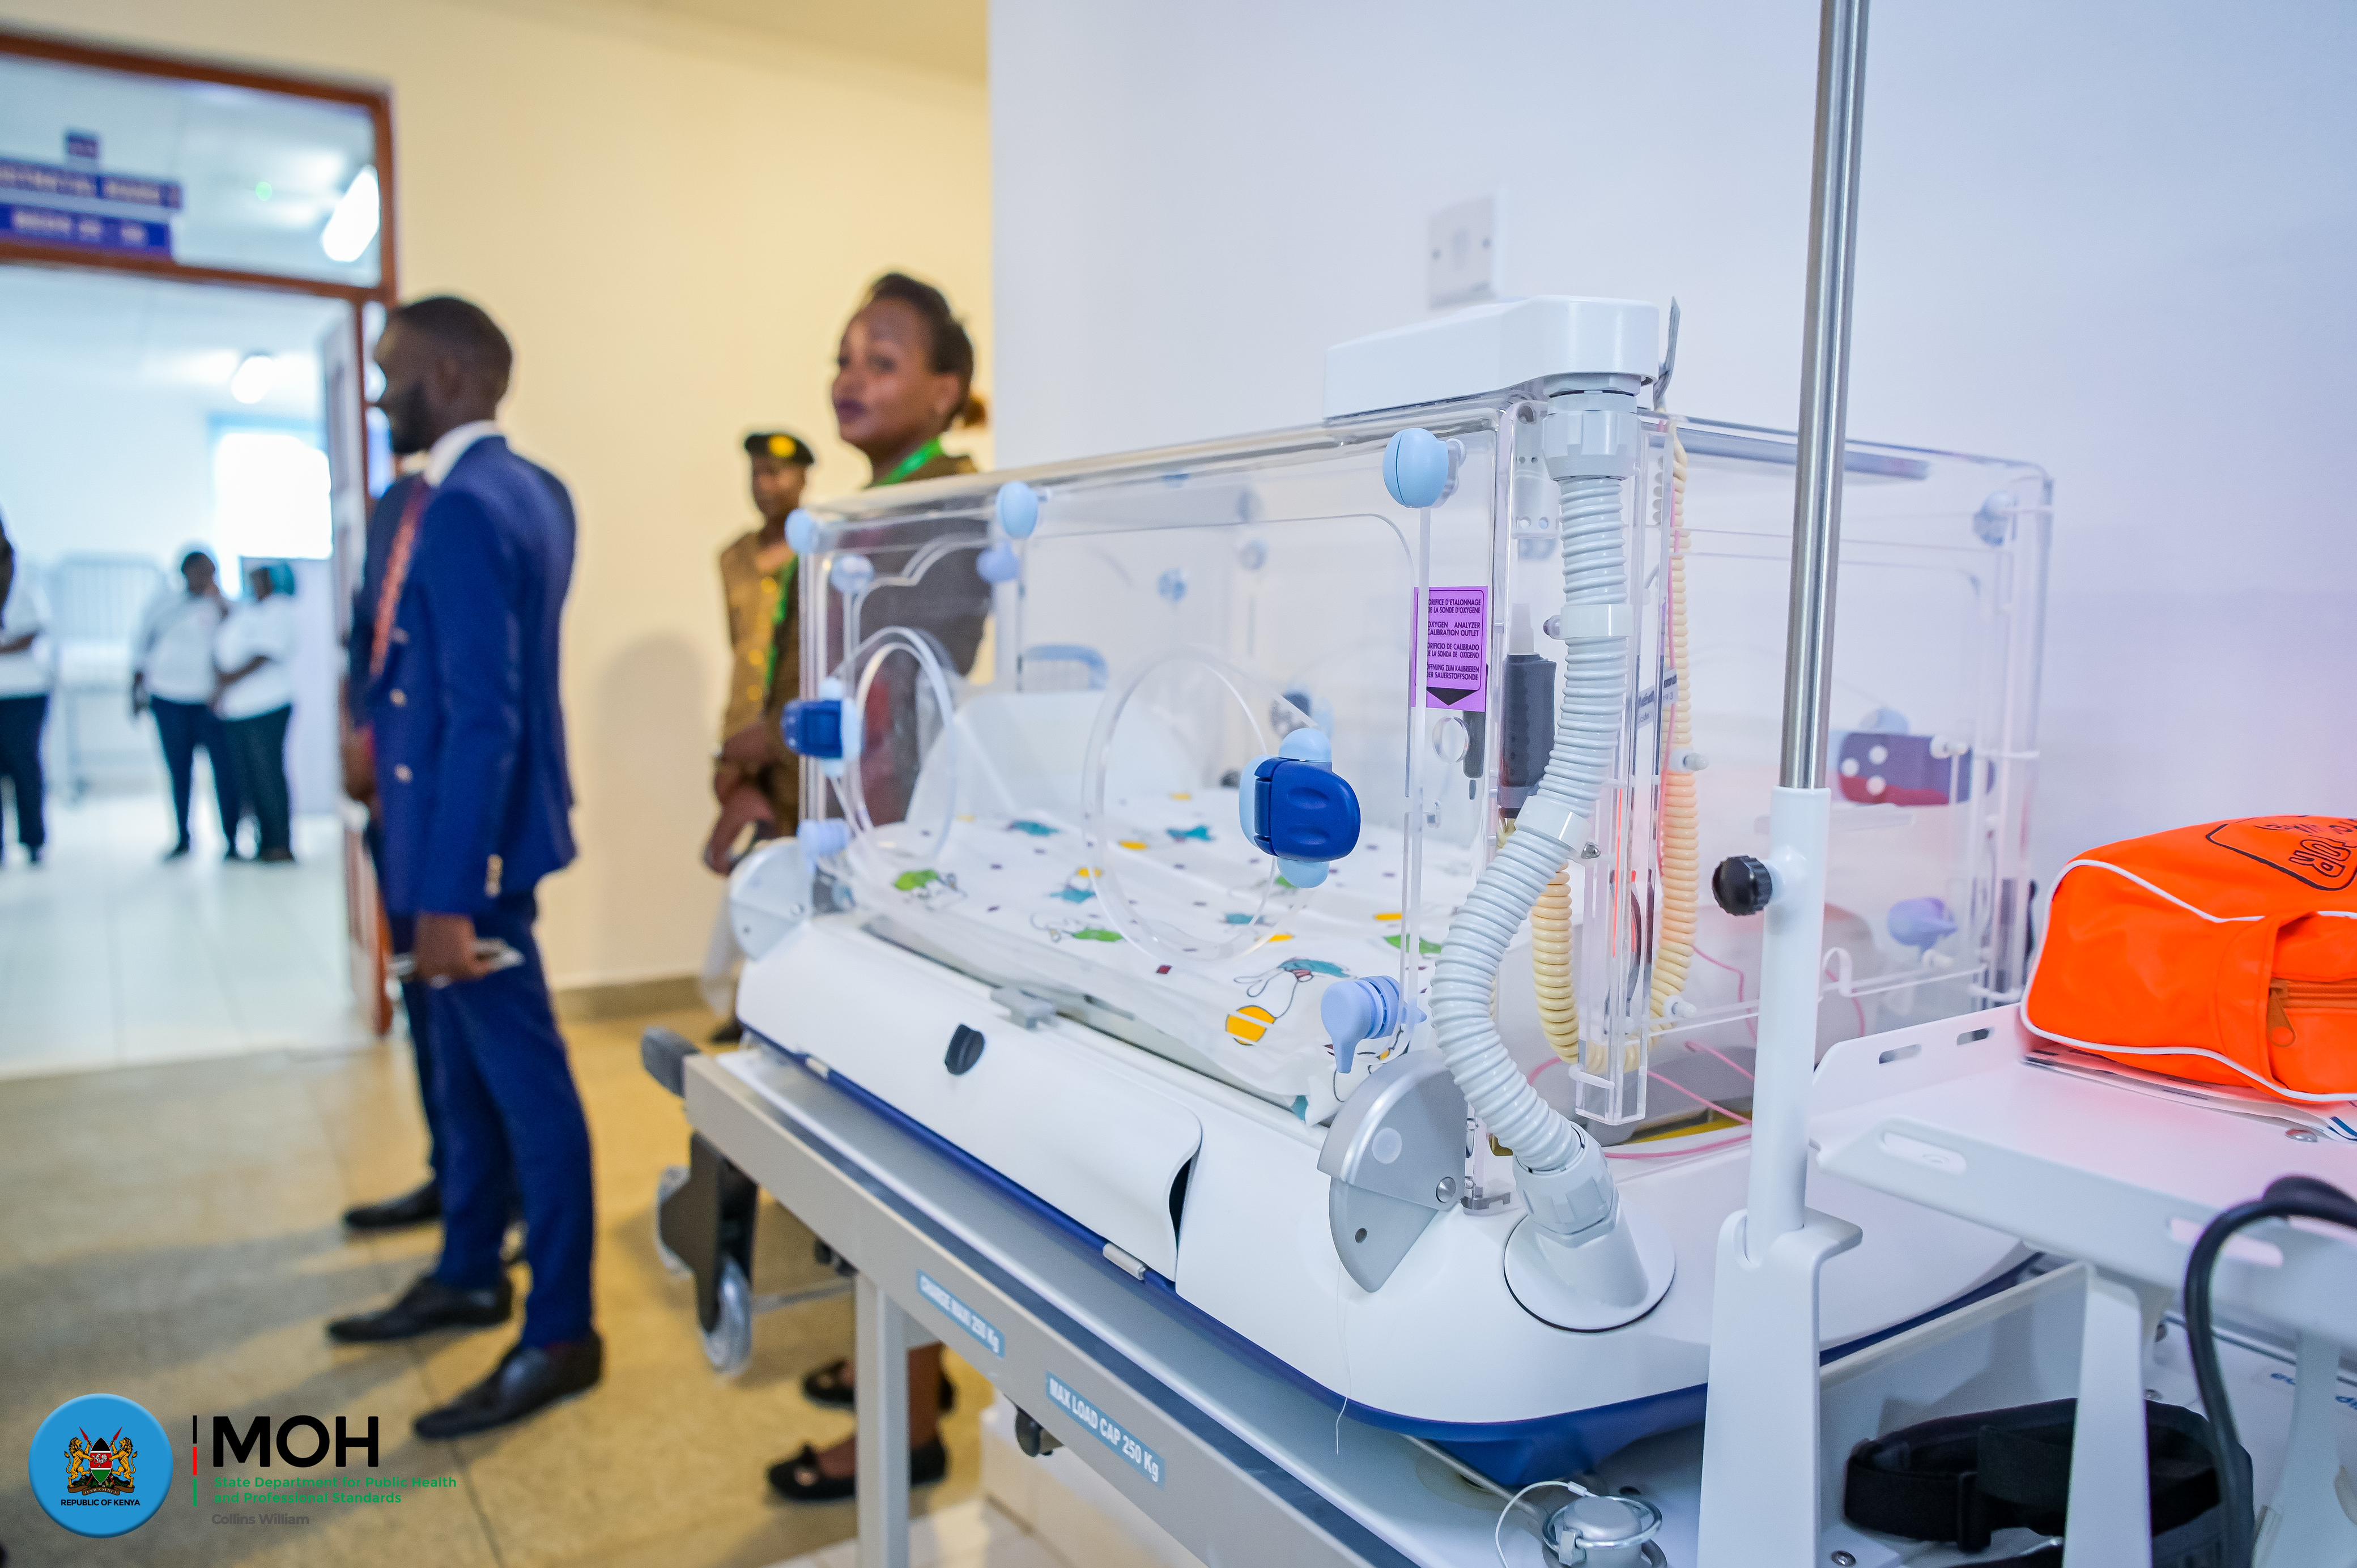 Opening of Mama Rachel Ruto Maternity Hospital